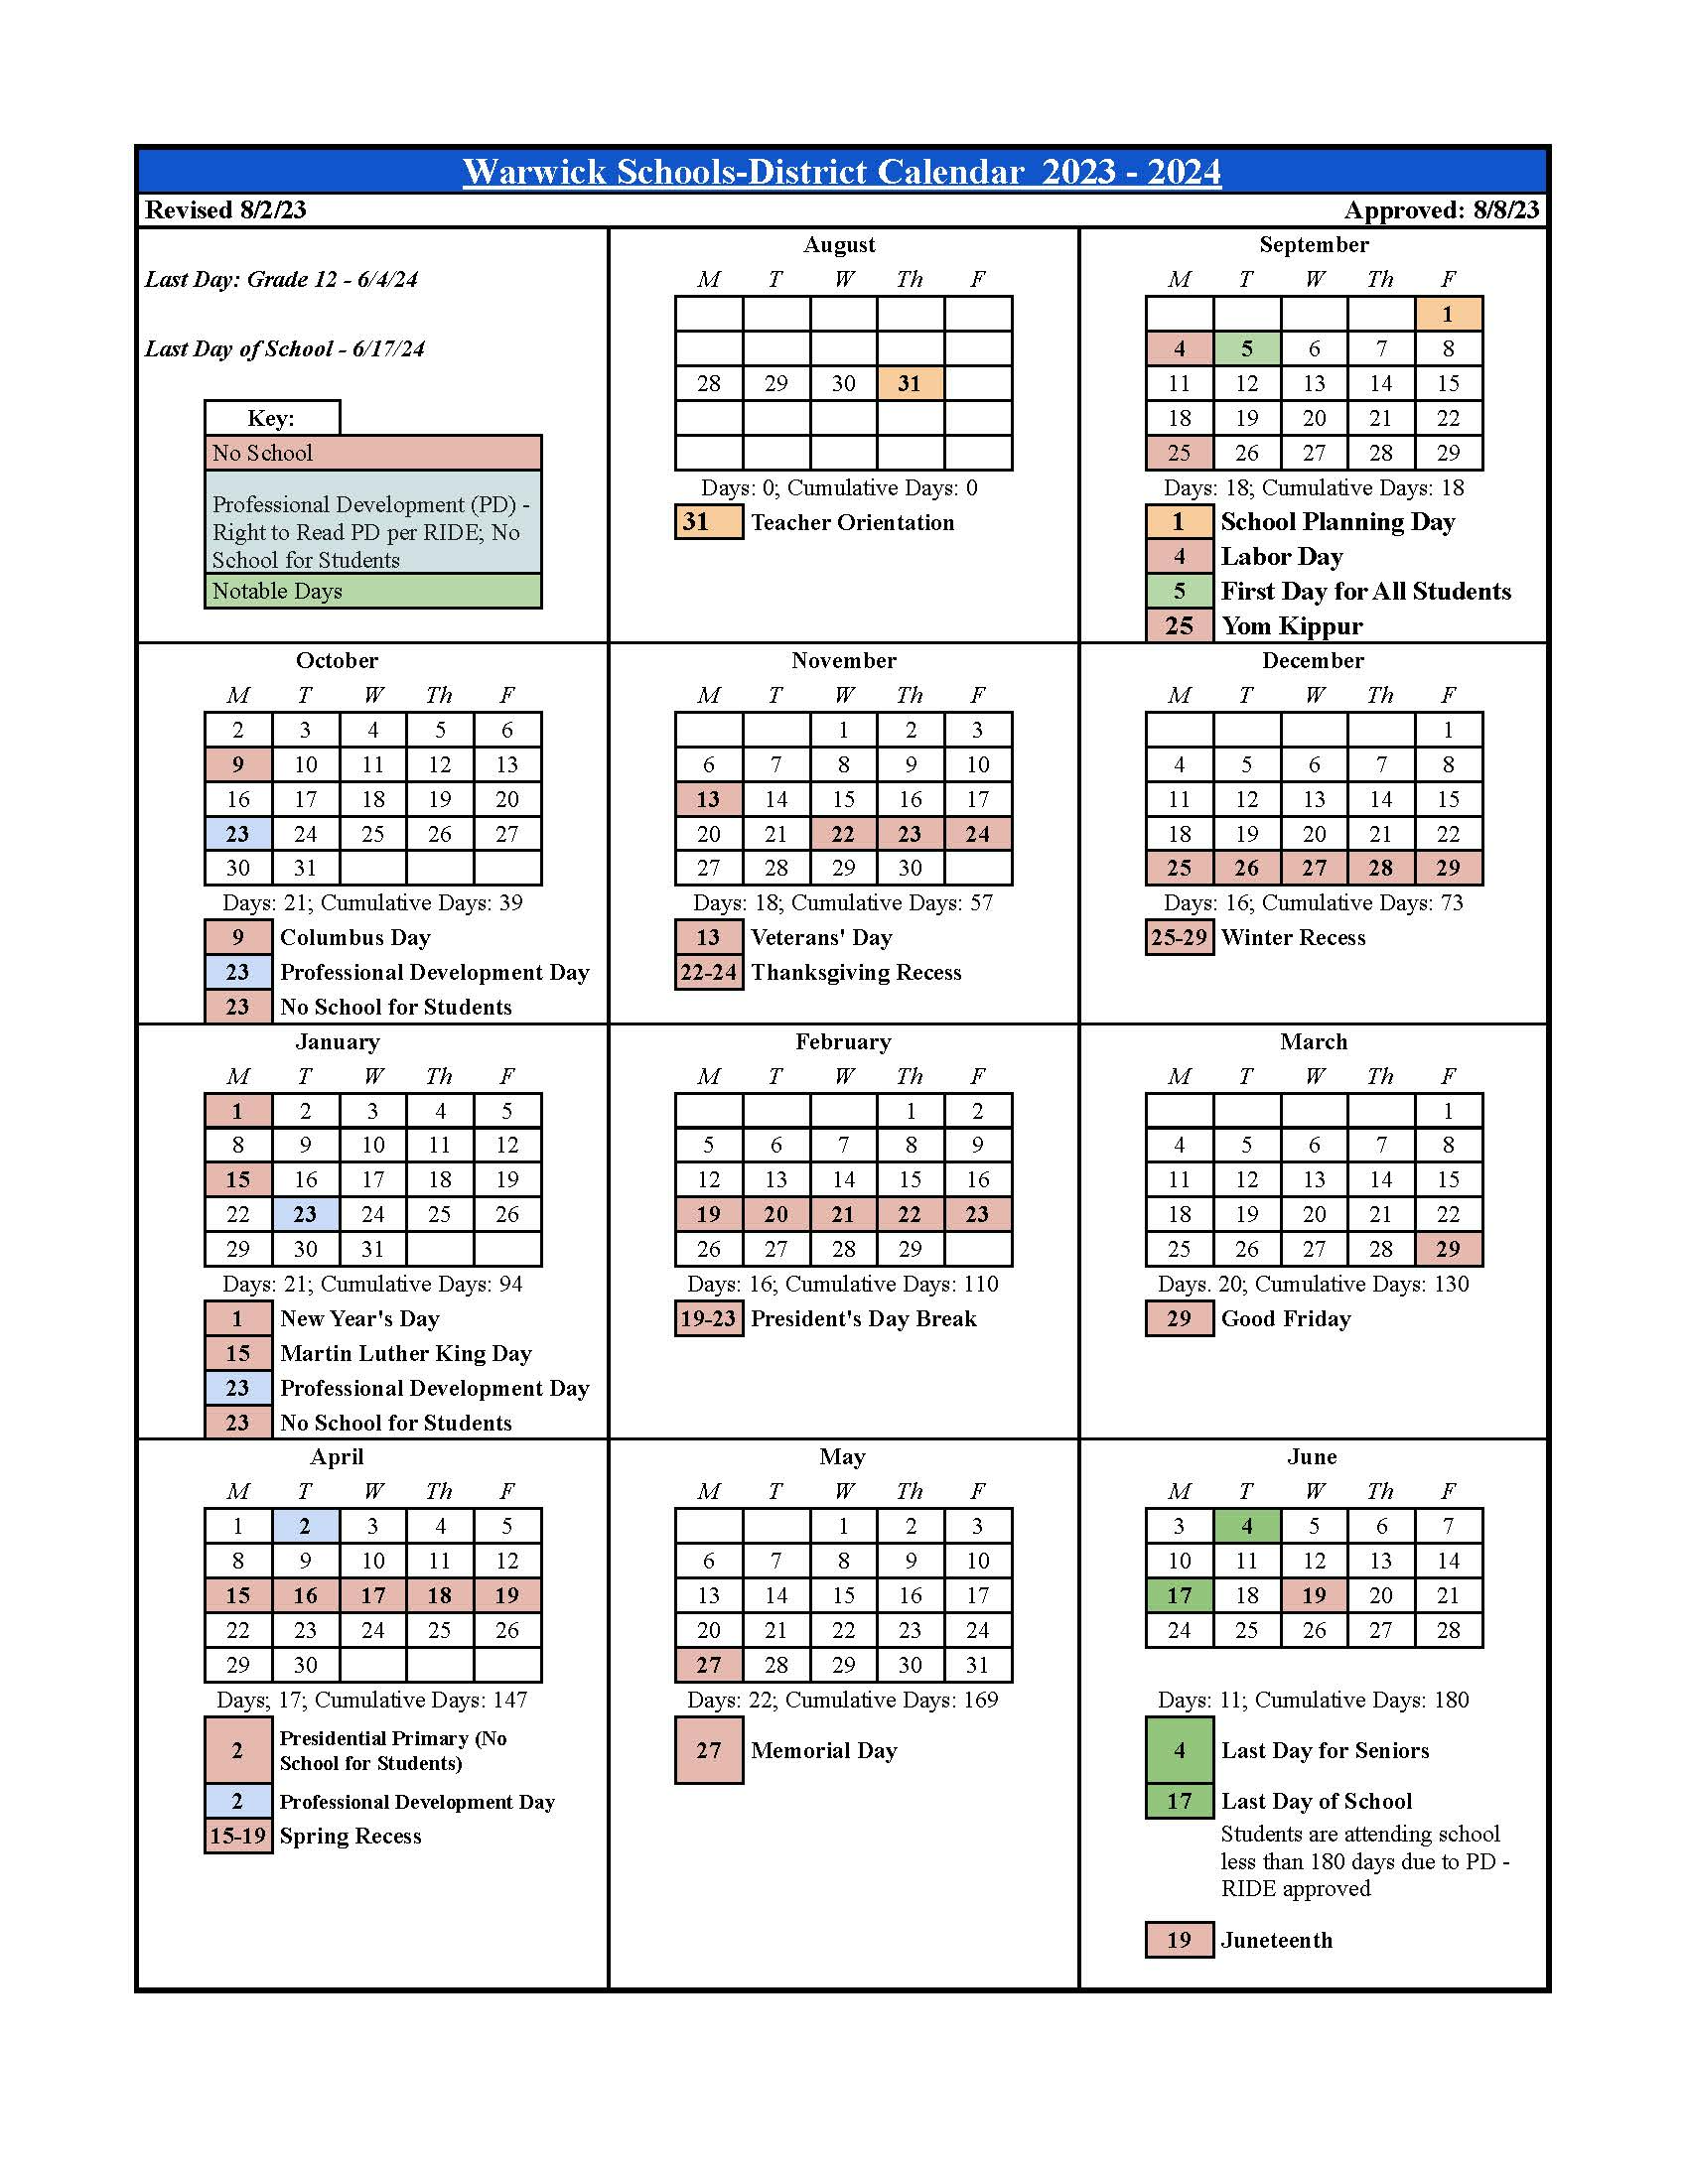 calendar-schedules-warwick-public-schools